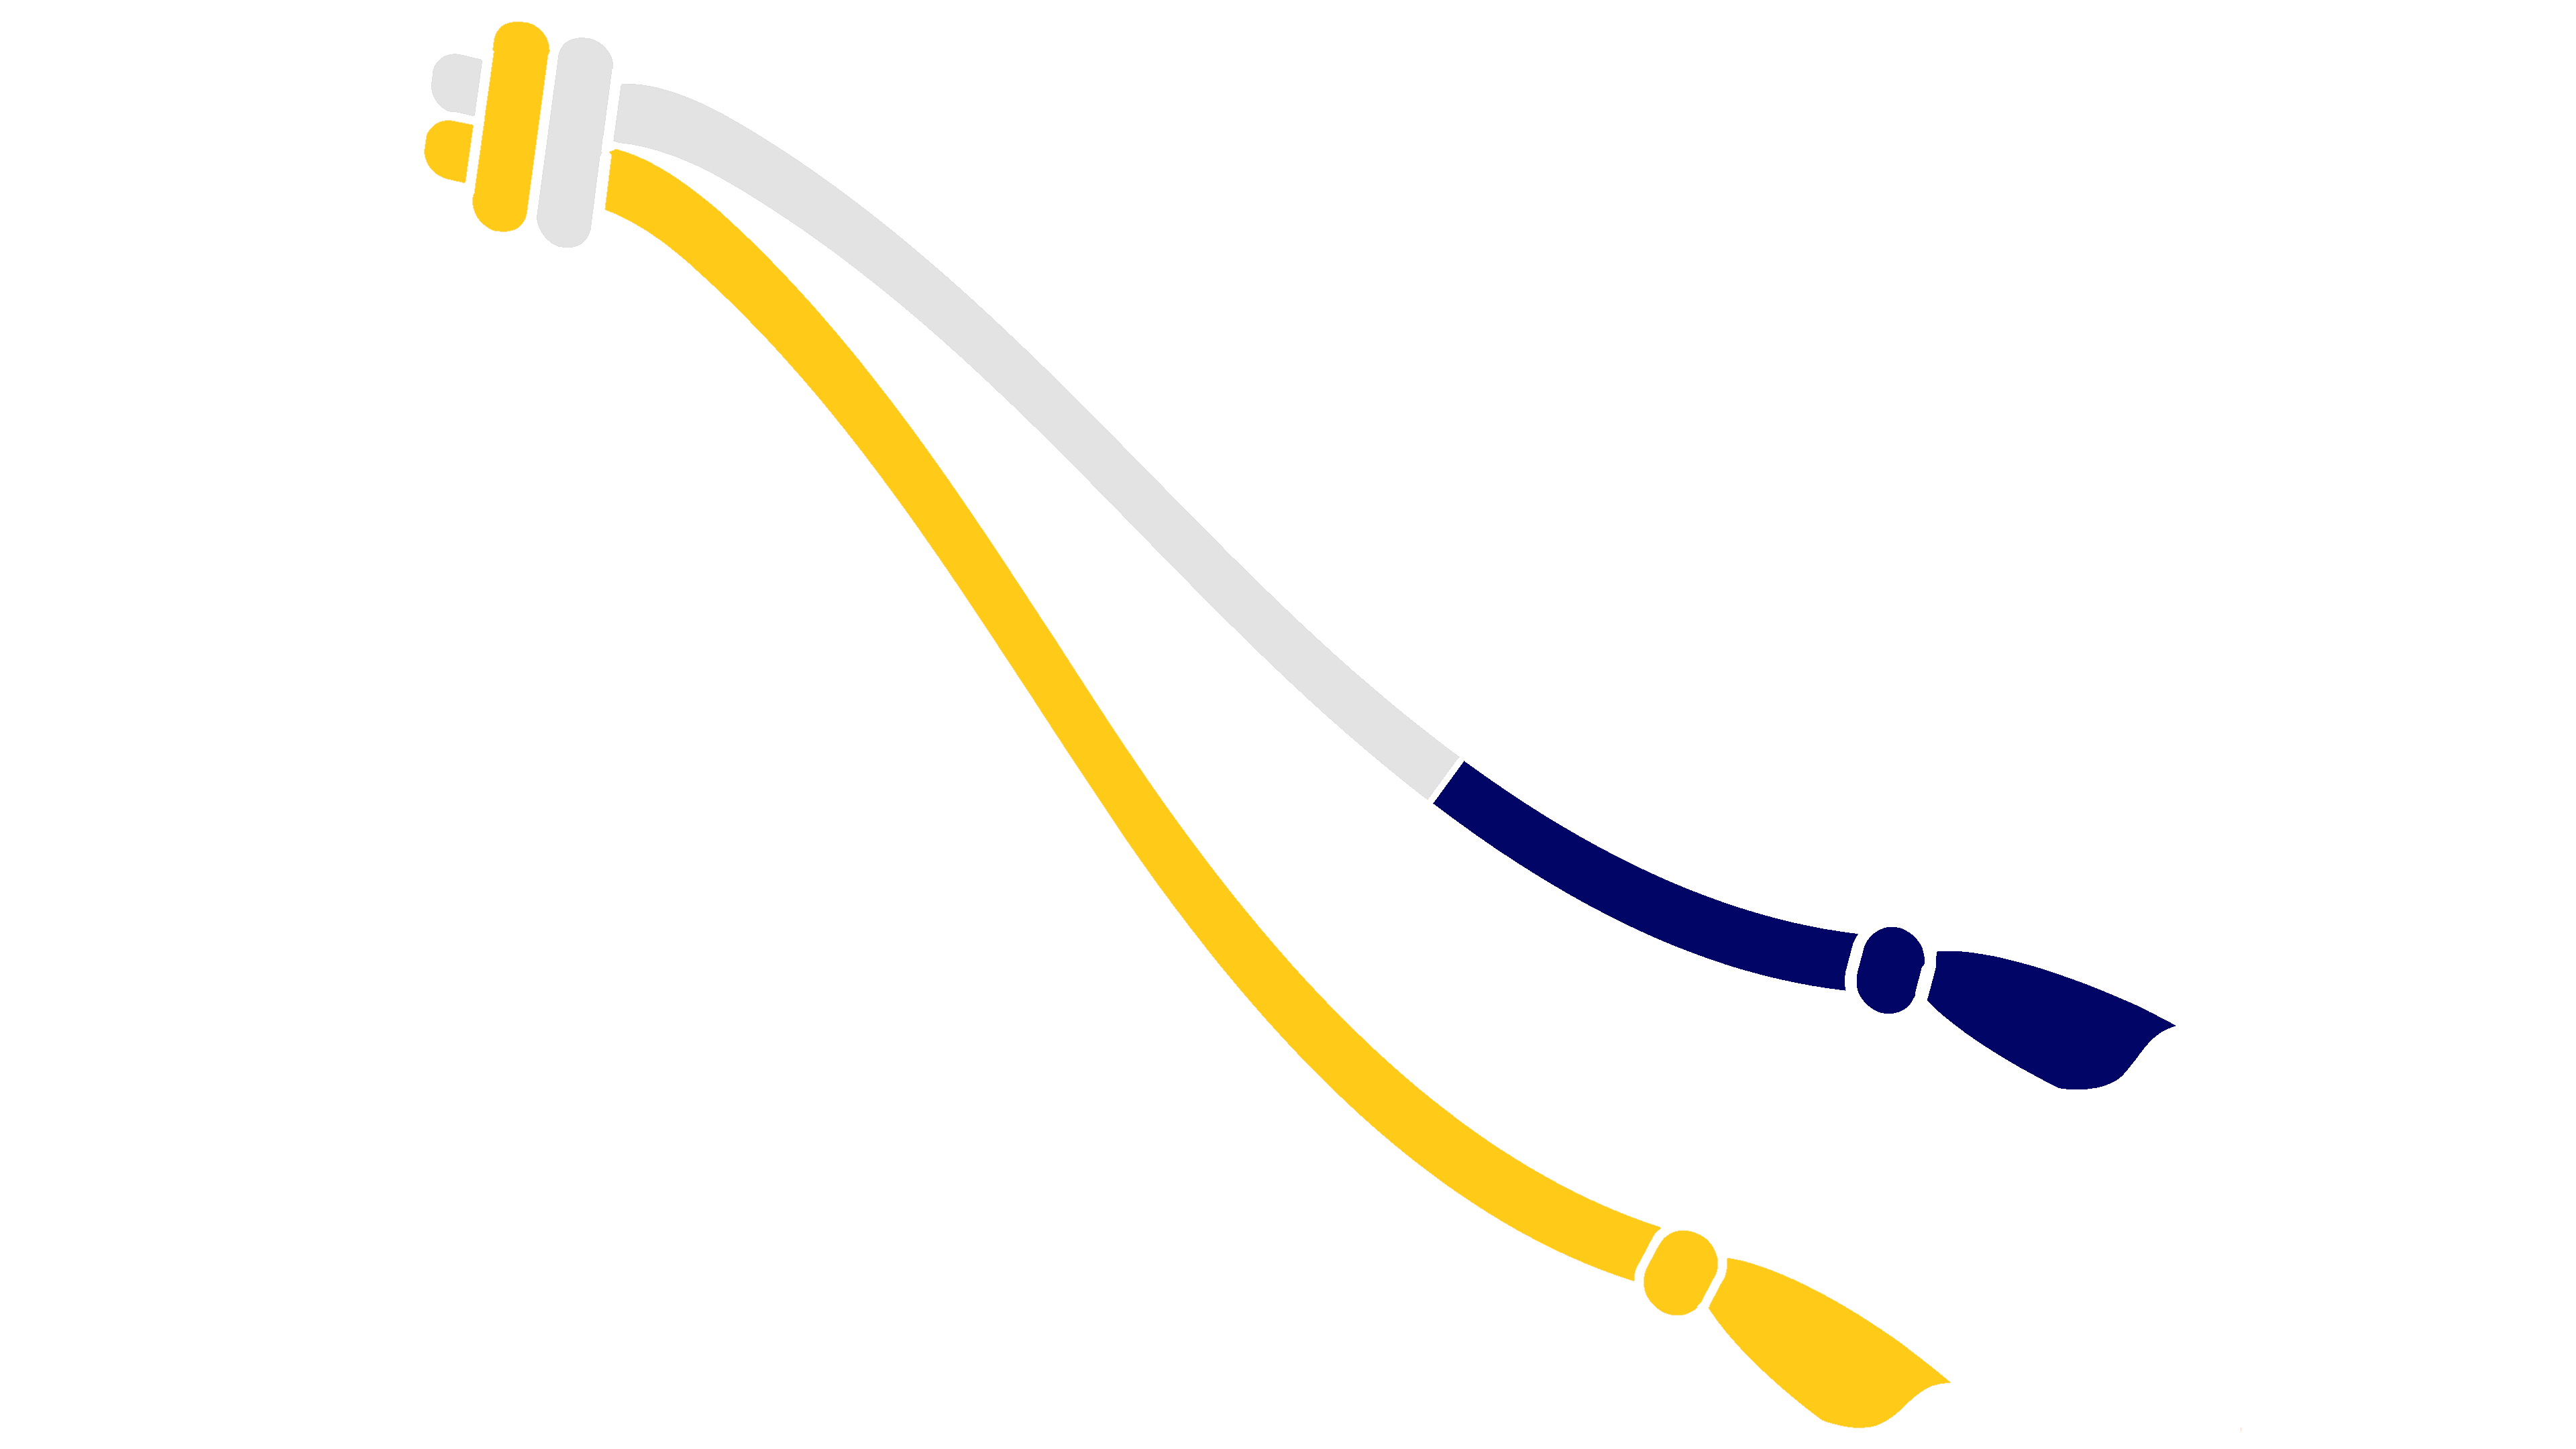 File:Corda Amarela ponta Azul - Capoeira 3.png - Wikimedia Commons